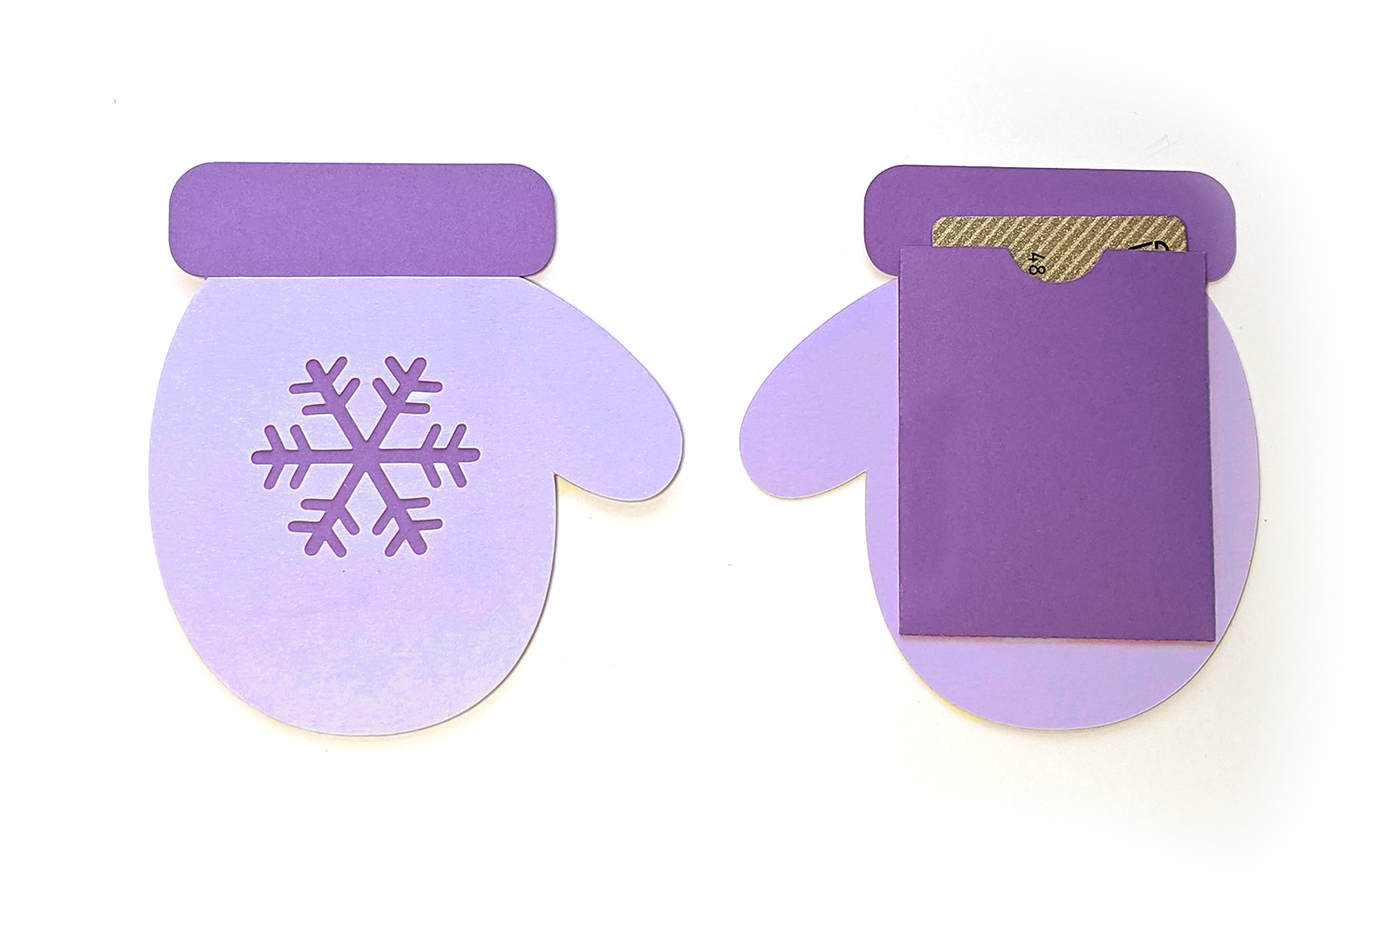 Mitten shaped gift card holder